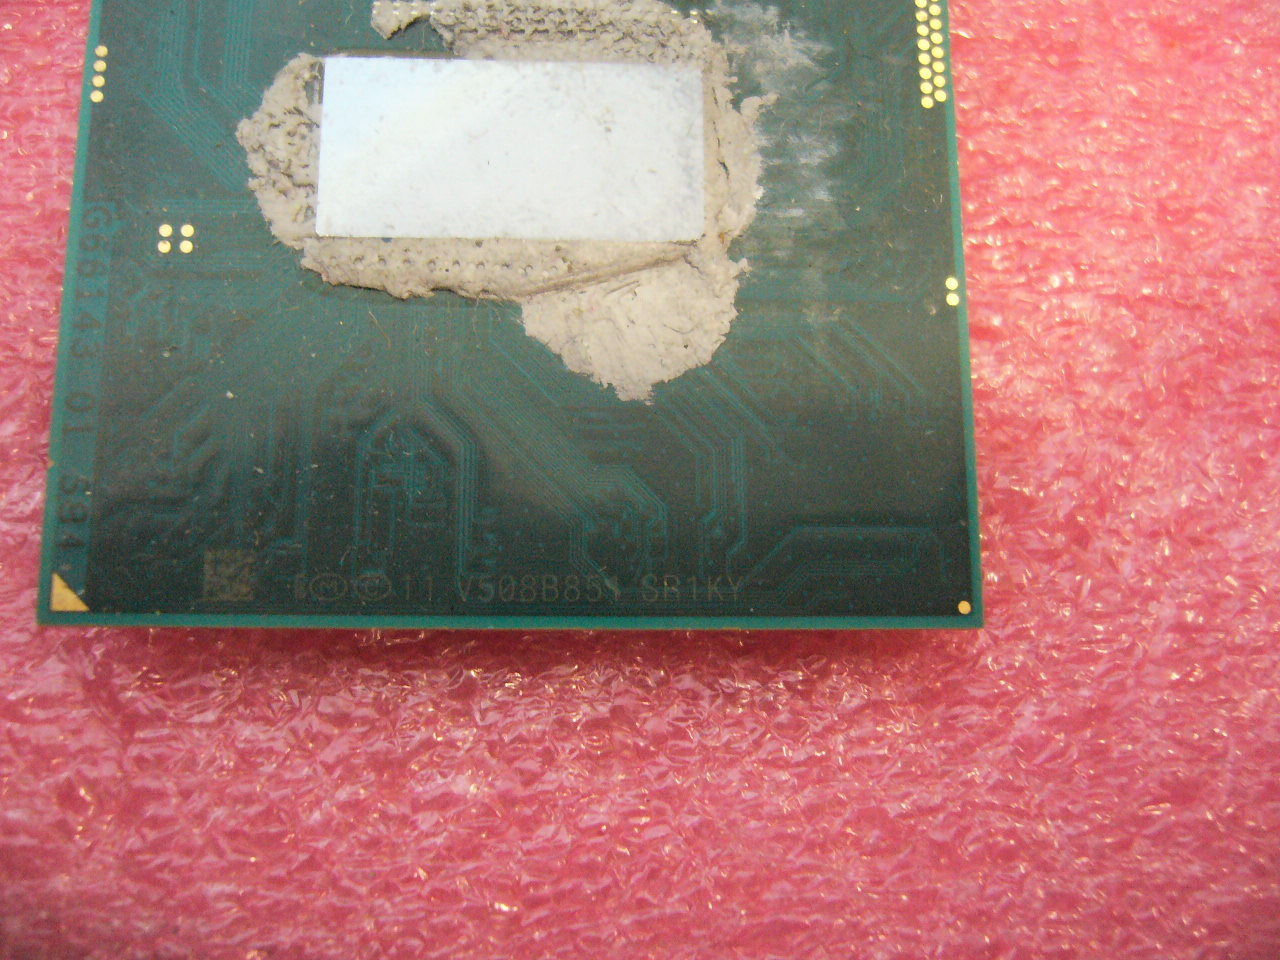 QTY 1x Intel CPU i7-4610M Dual-Core 3.0 Ghz rPGA946 SR1KY Socket G3 NOT WORKING - zum Schließen ins Bild klicken